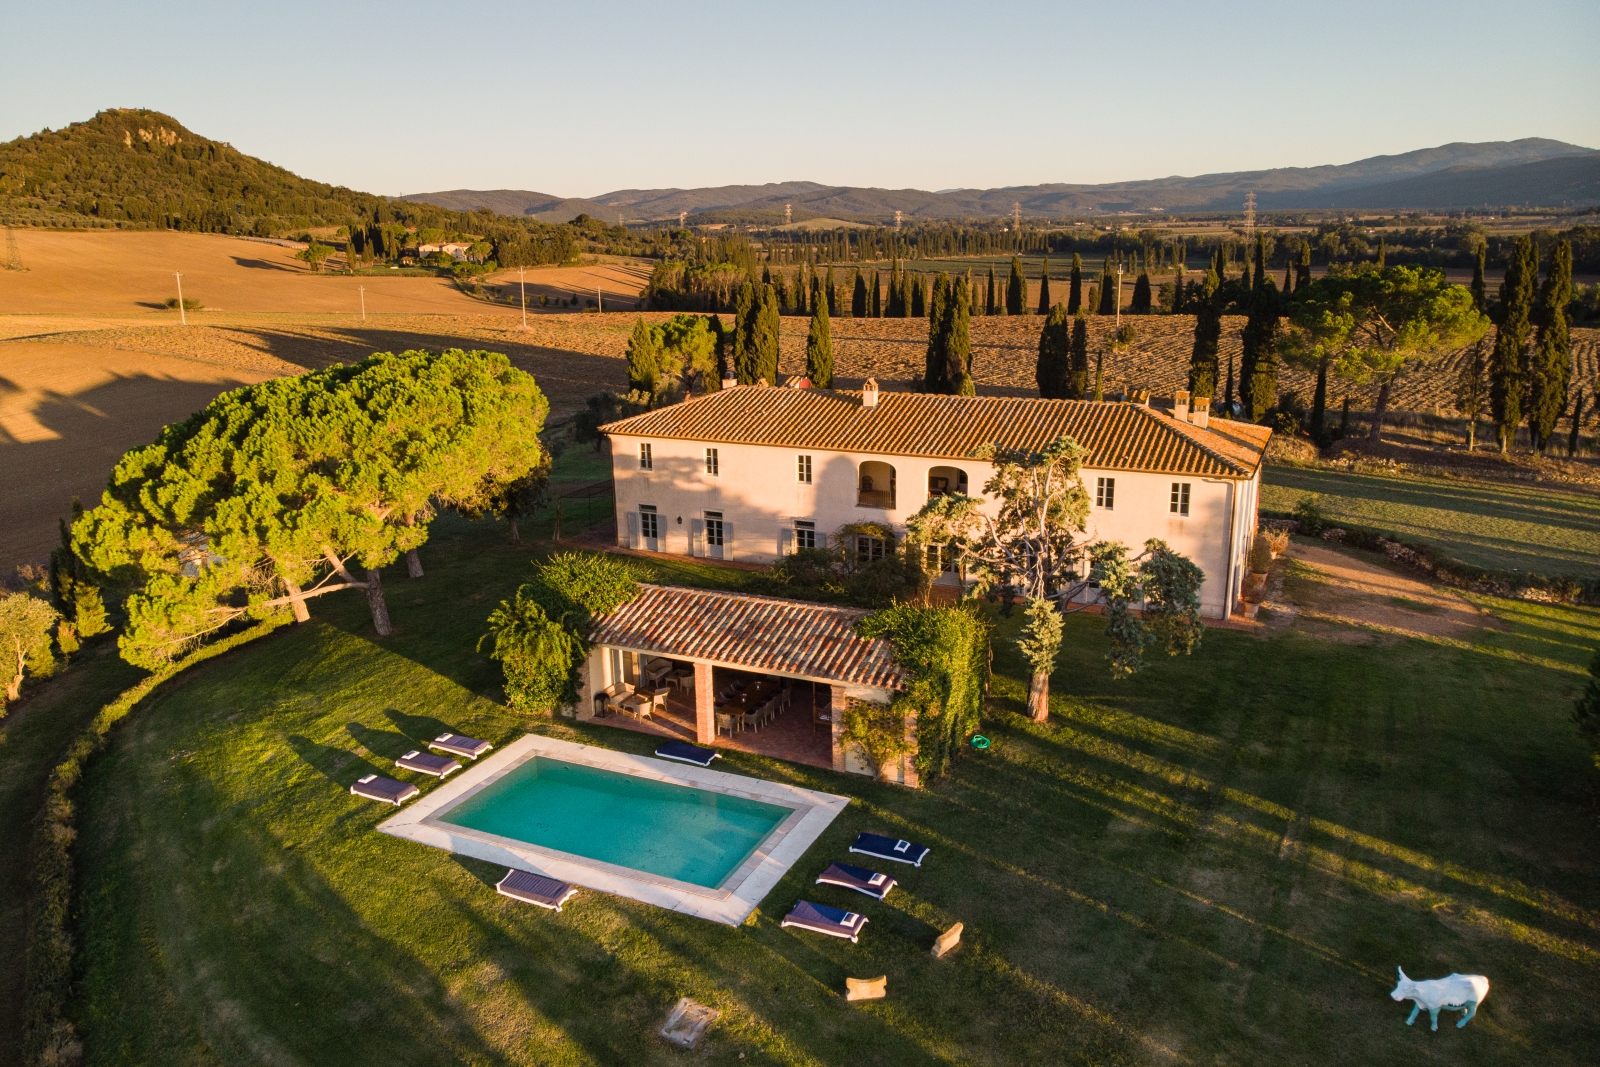  Aerial view of La Vigna villa in Tuscany Italy